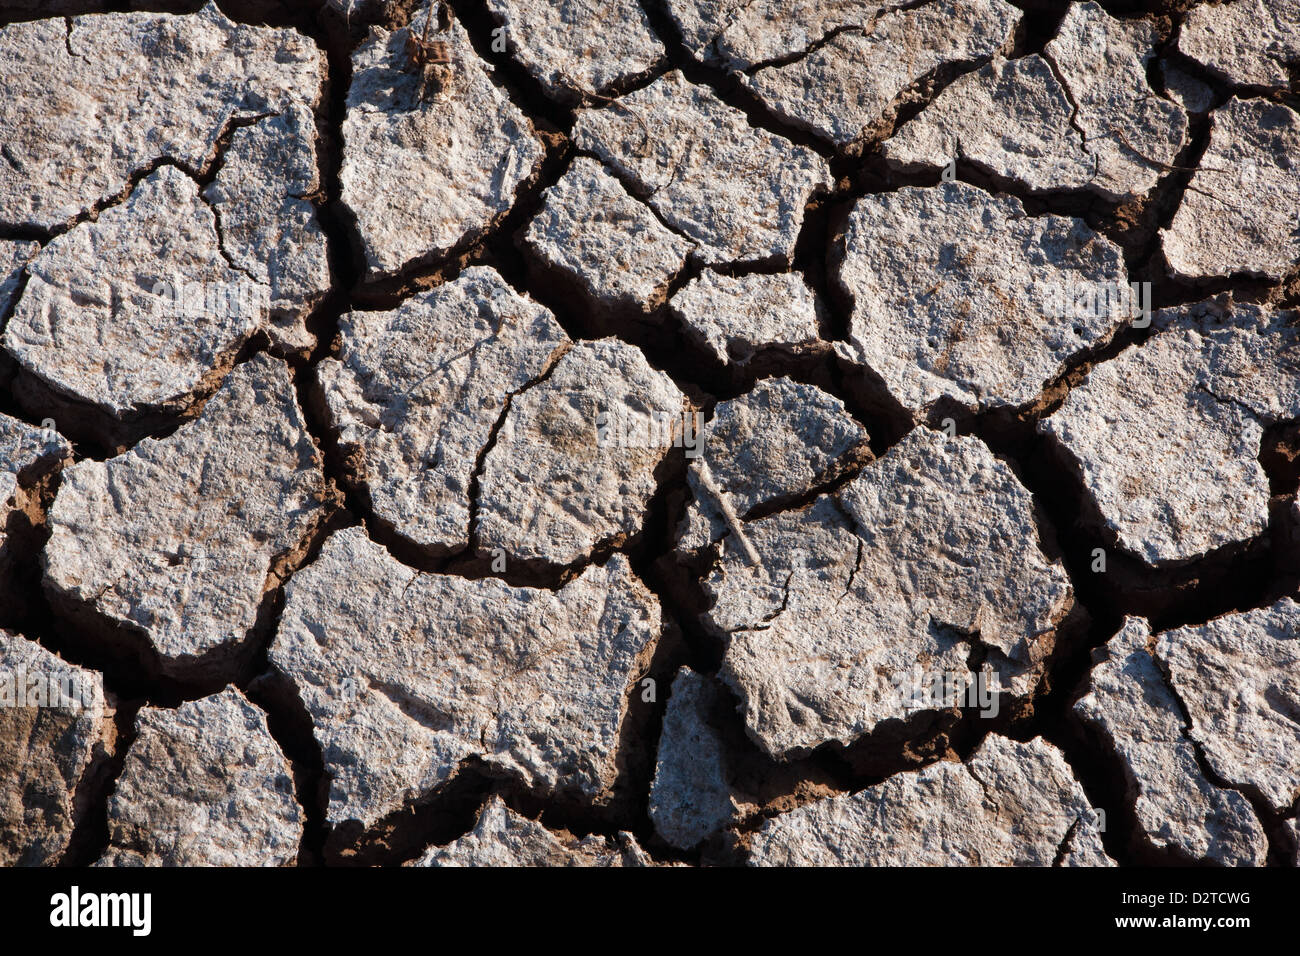 Cracked earth in Sarigua national park (desert), Herrera province, Republic of Panama. Stock Photo